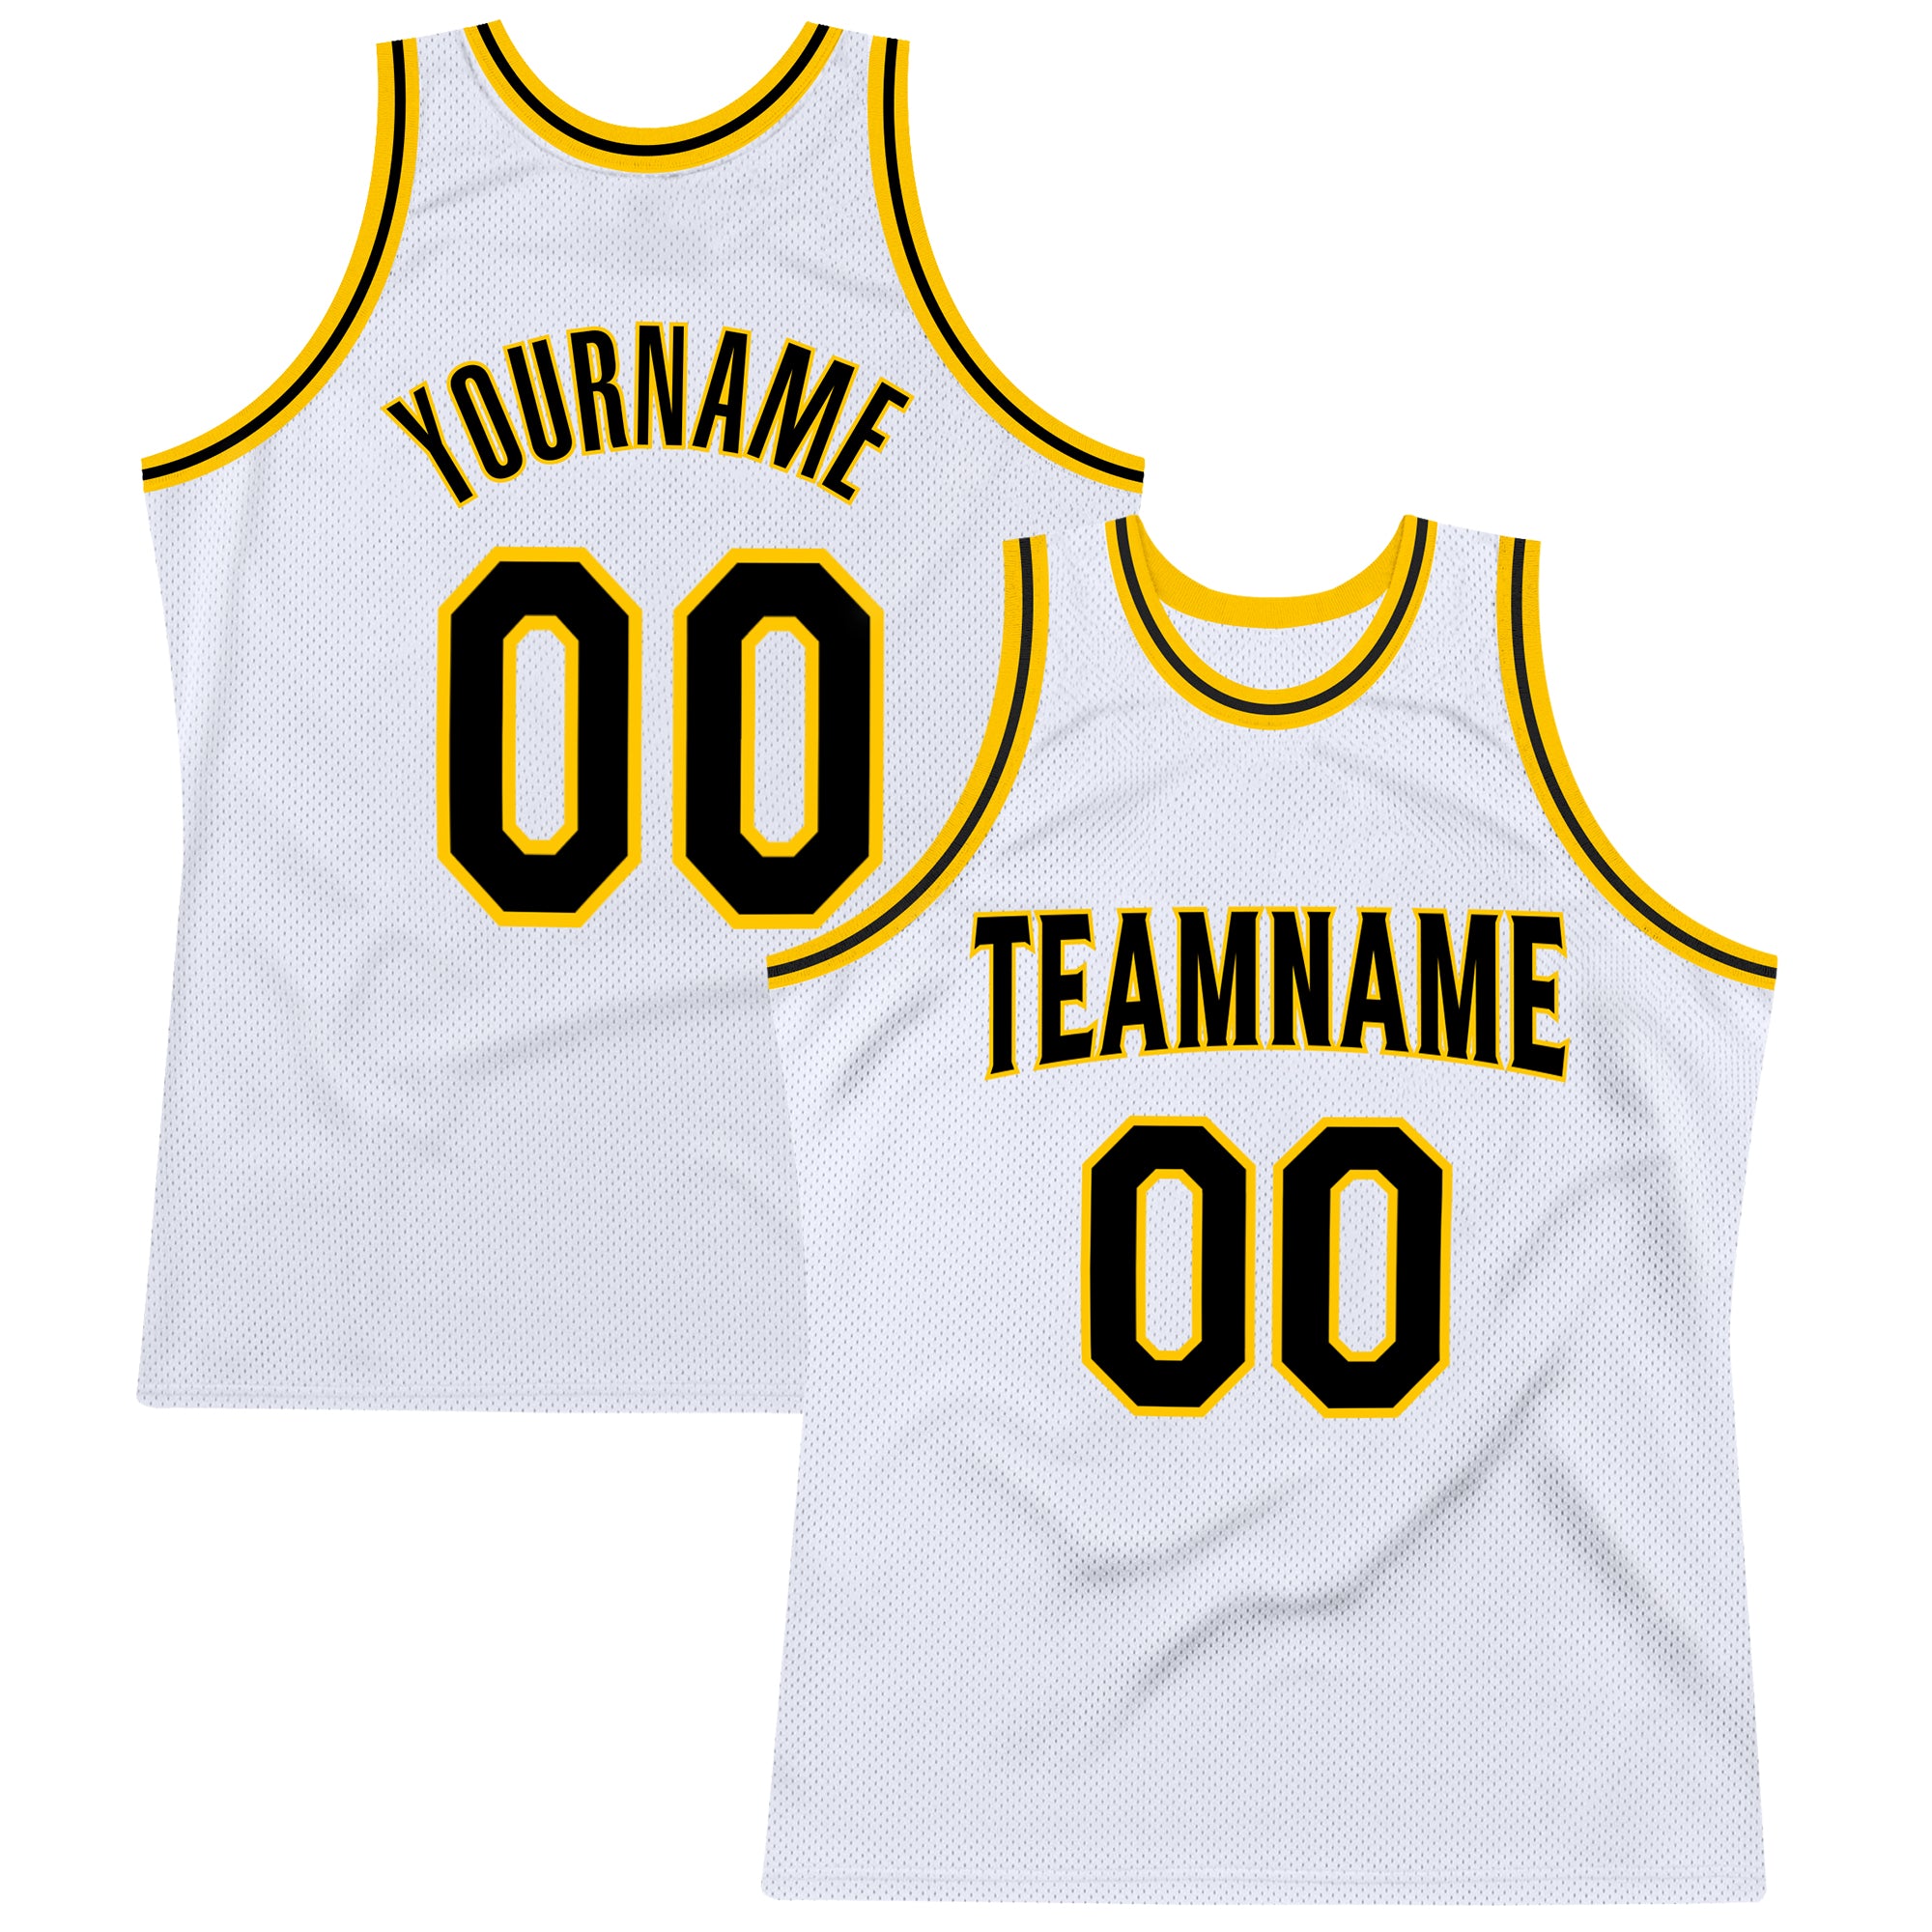 Men's Basketball T-Shirt / Jersey TS900 - Black/Grey/Gold